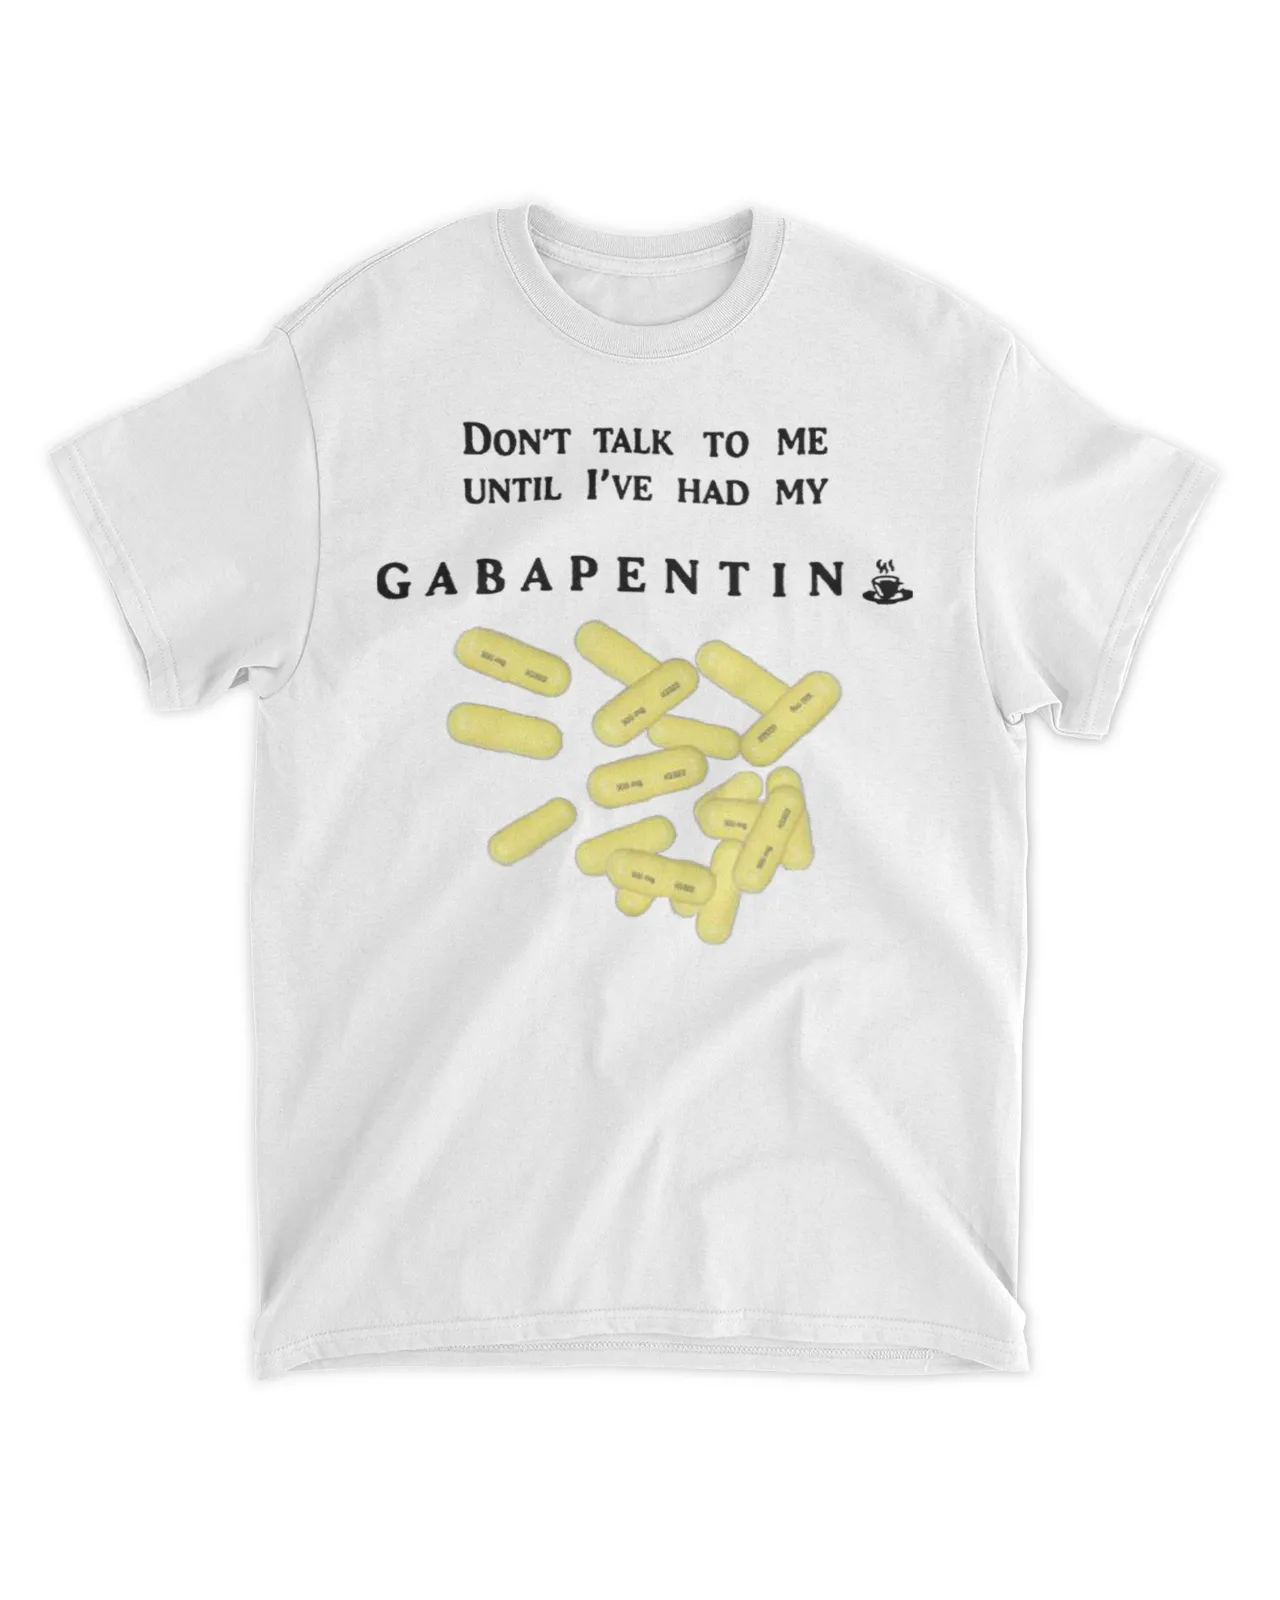  Don't talk to me until I've had my Gabapentin shirt